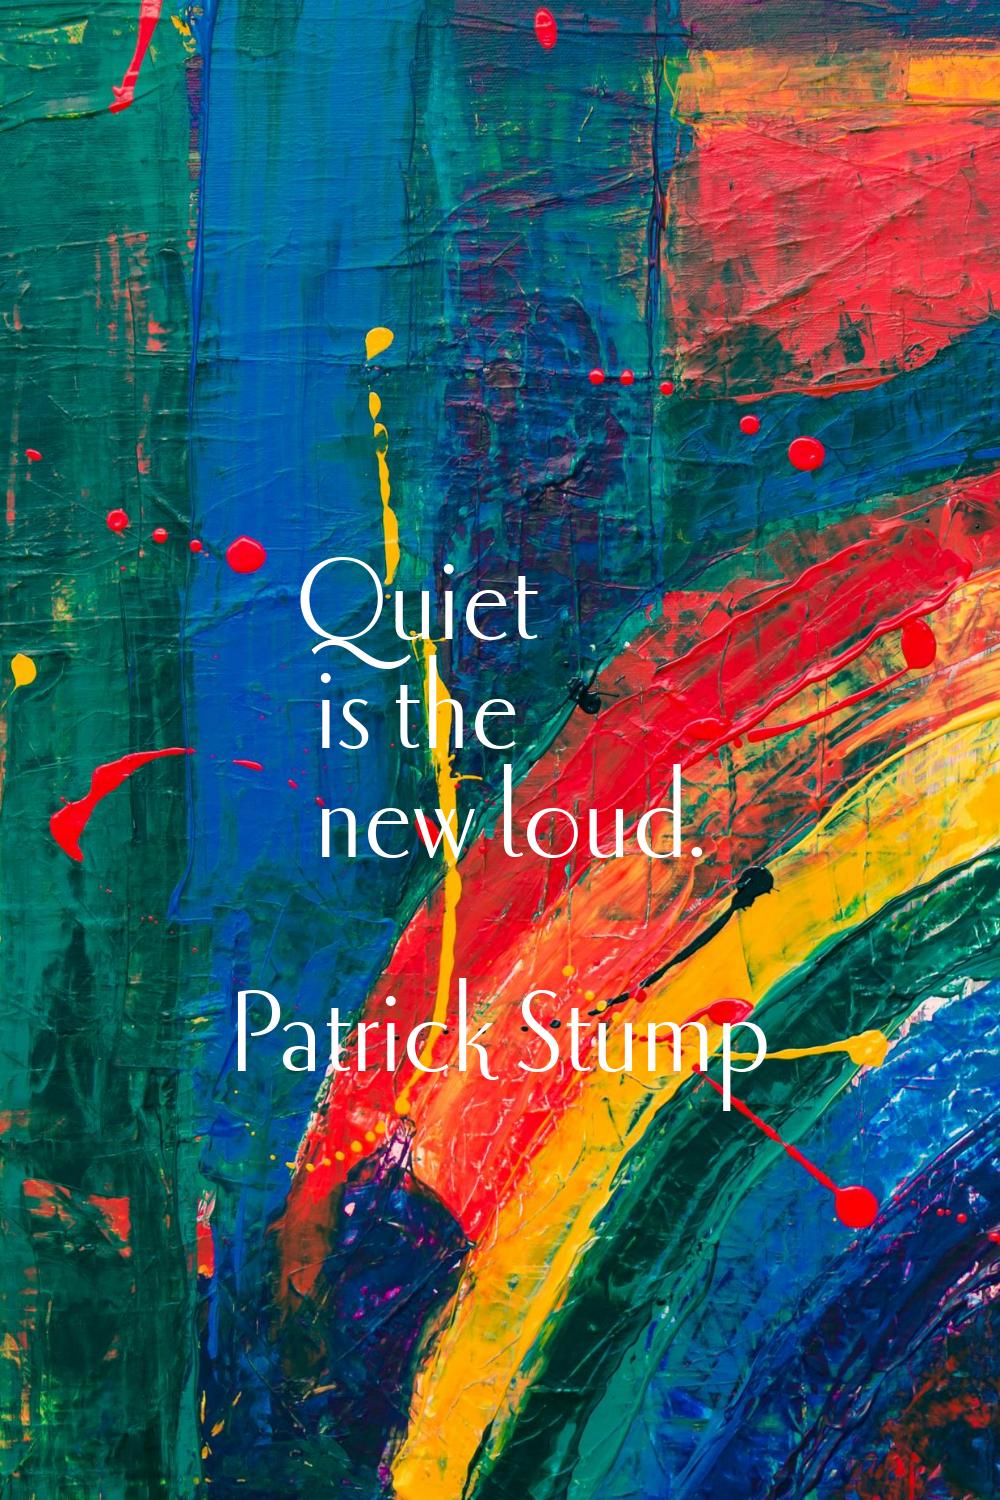 Quiet is the new loud.